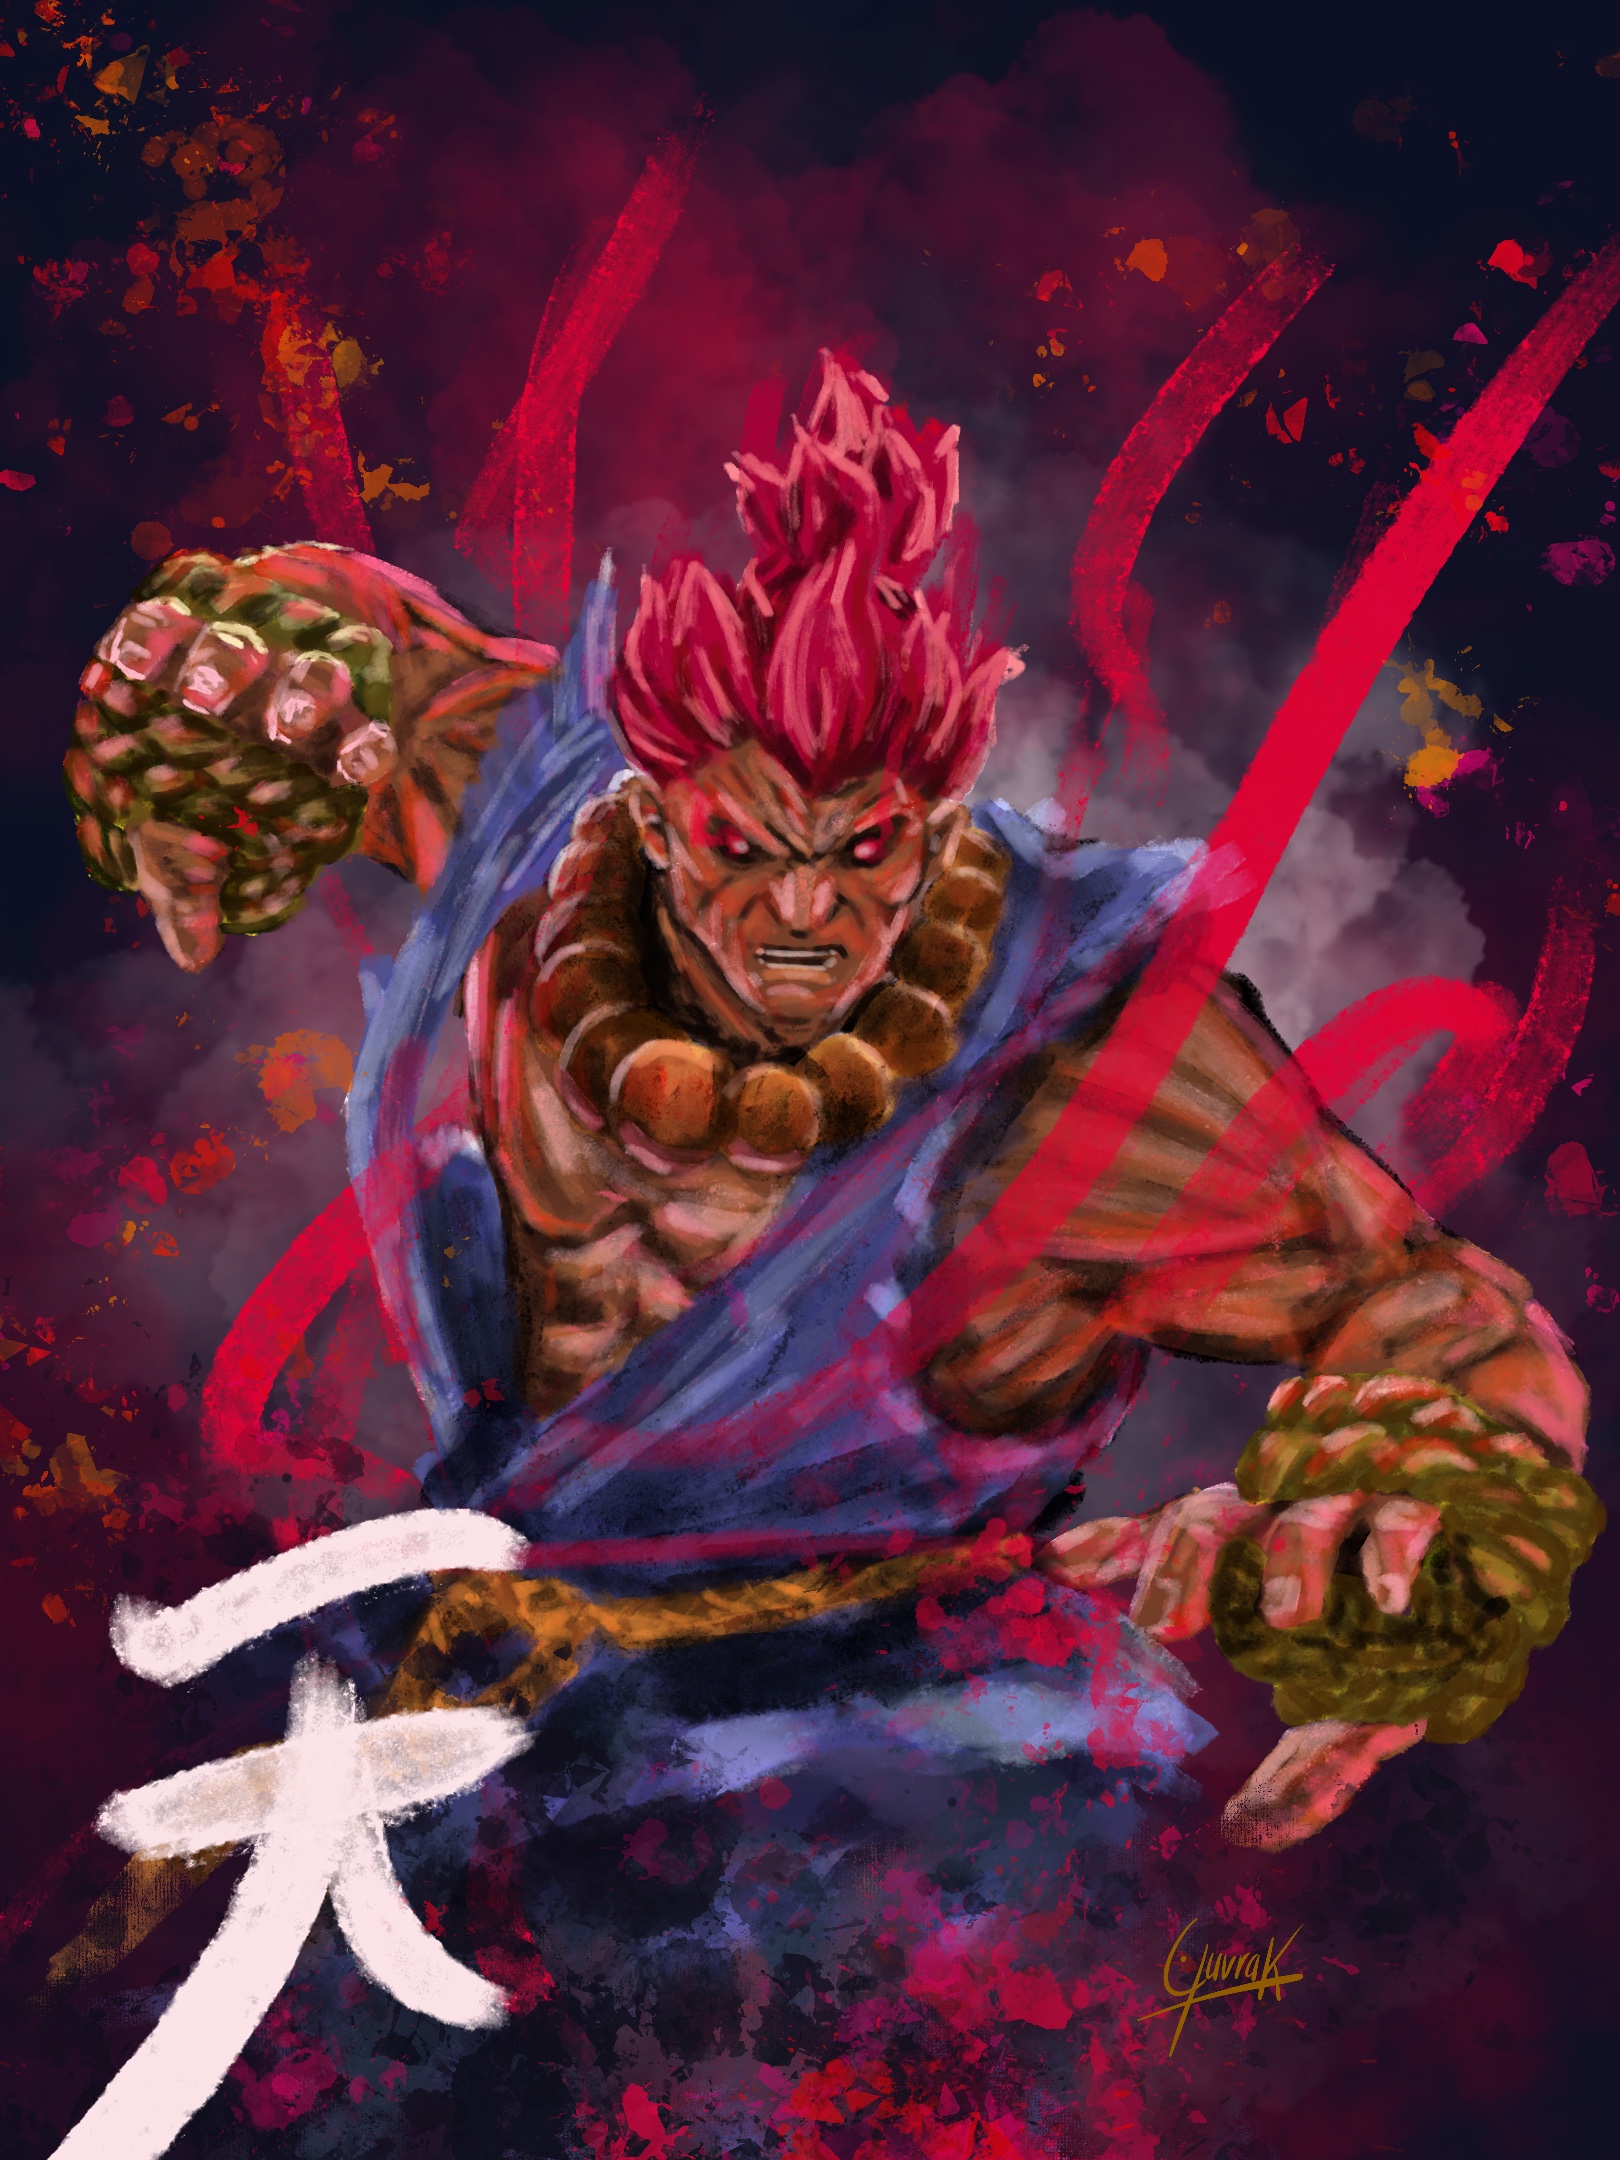 Akuma Street Fighter added a new photo. - Akuma Street Fighter